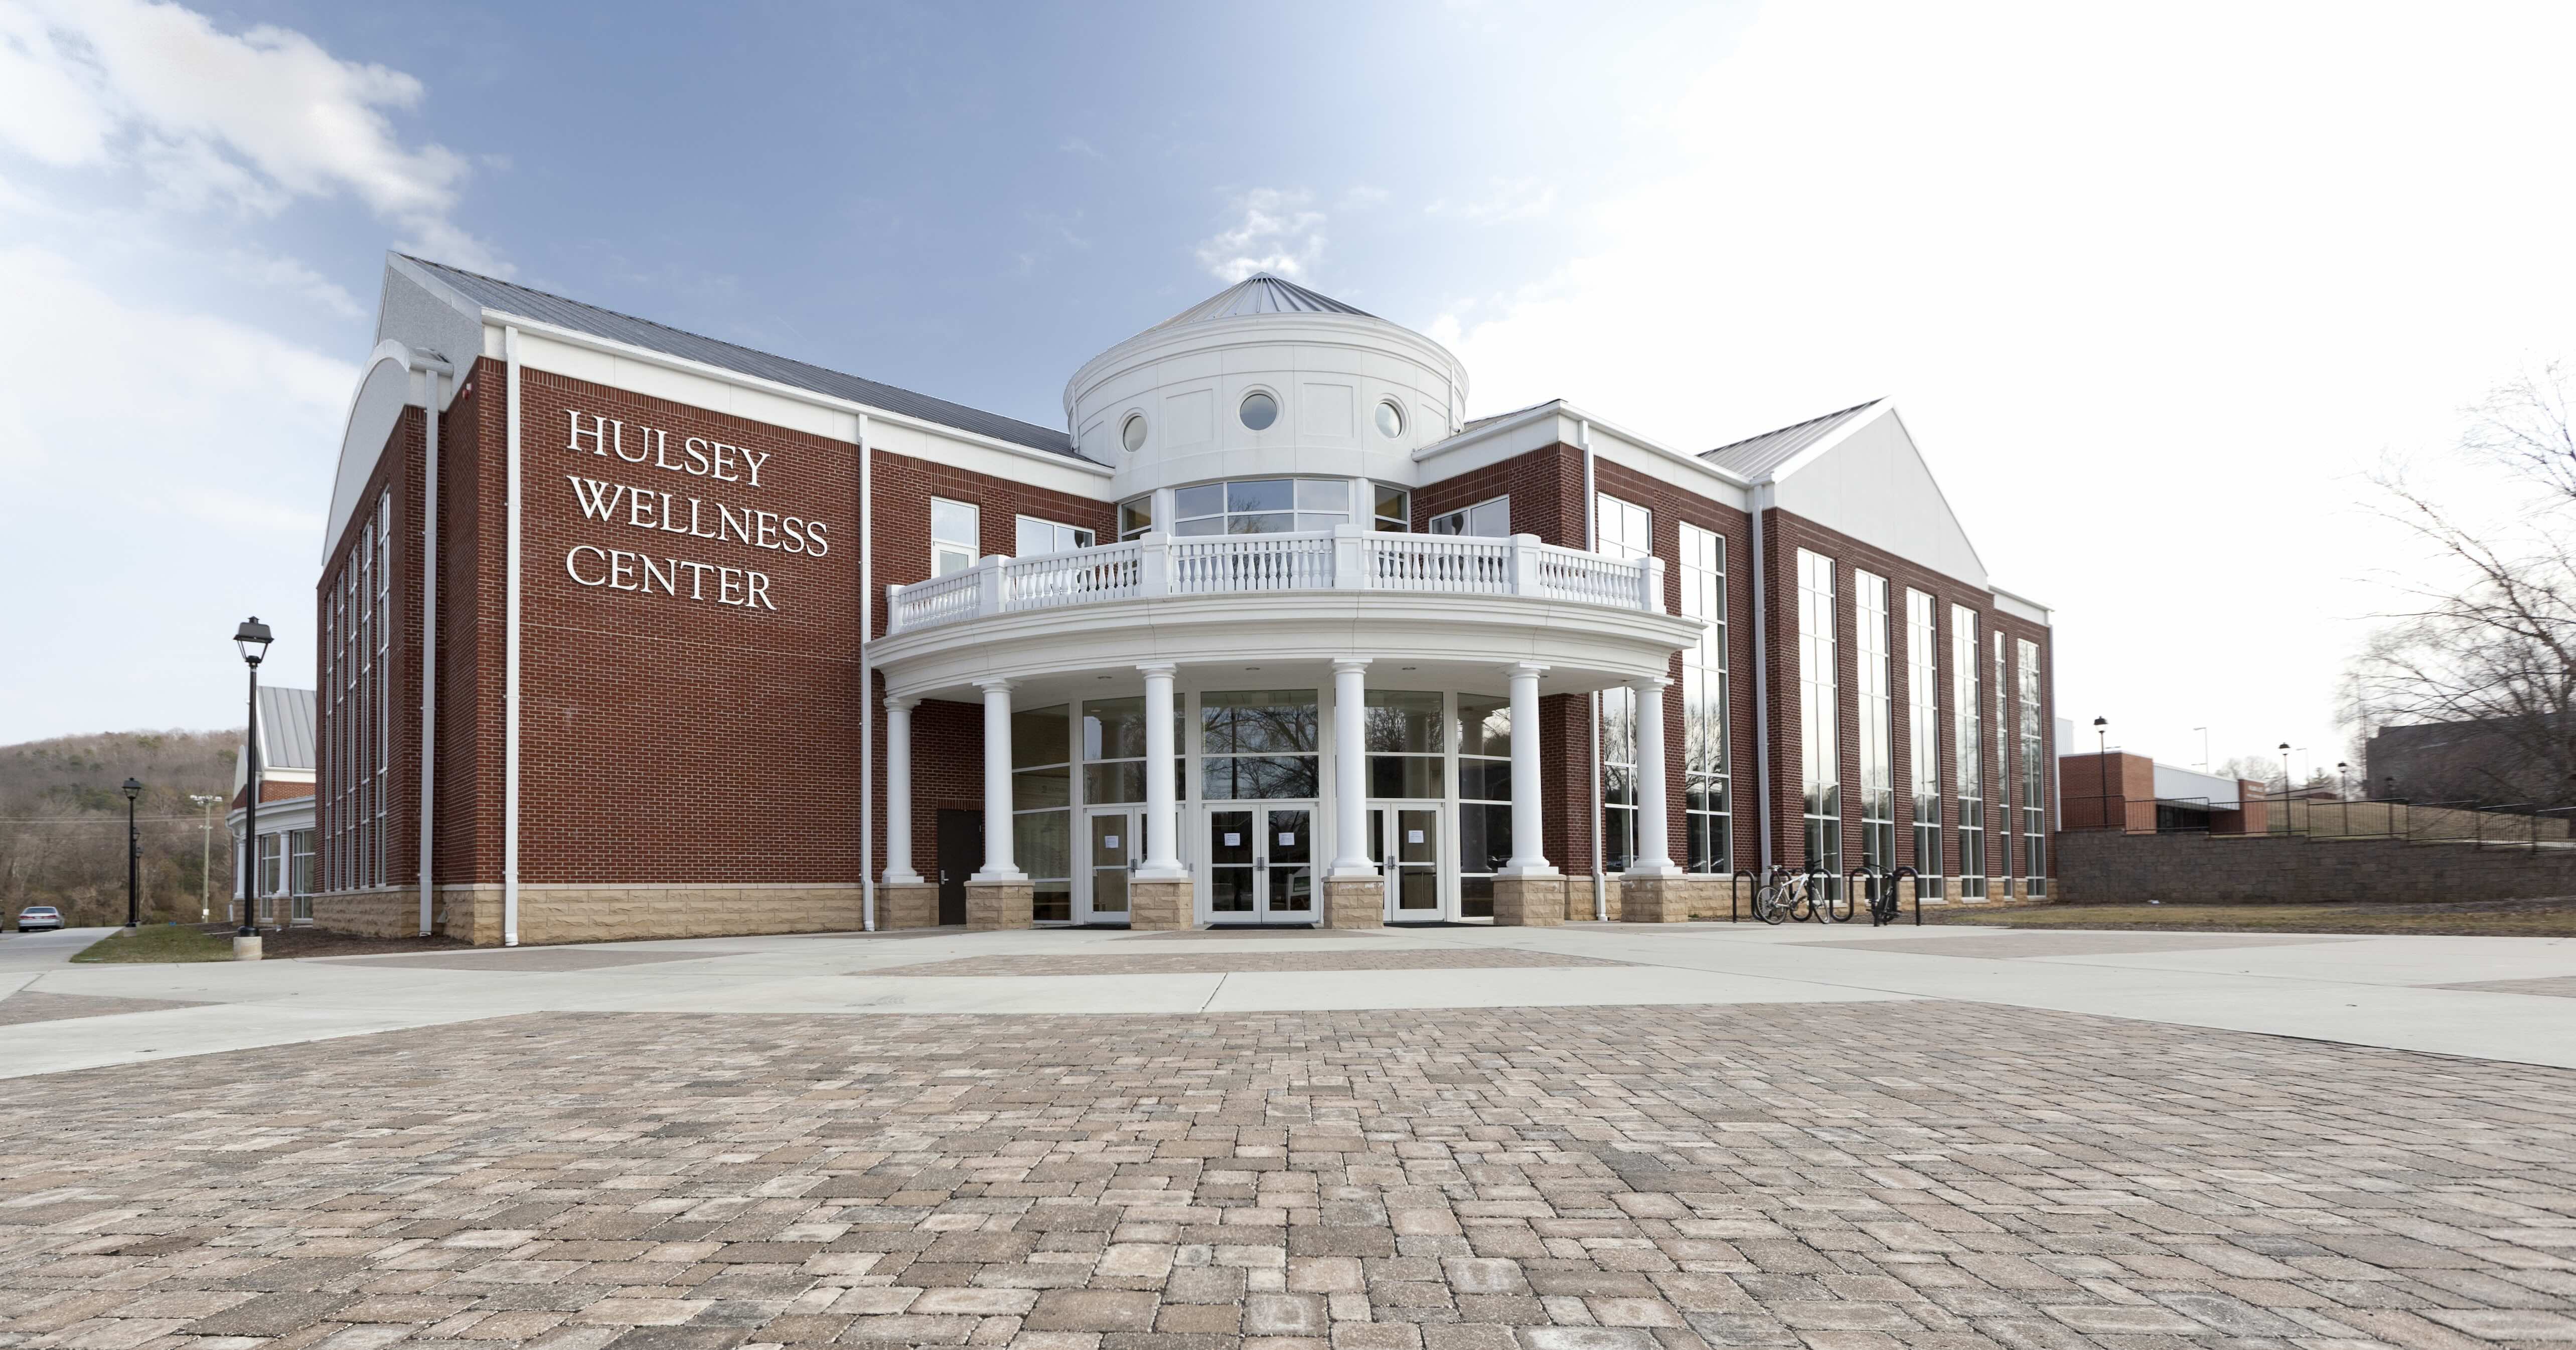 Hulsey Wellness Center